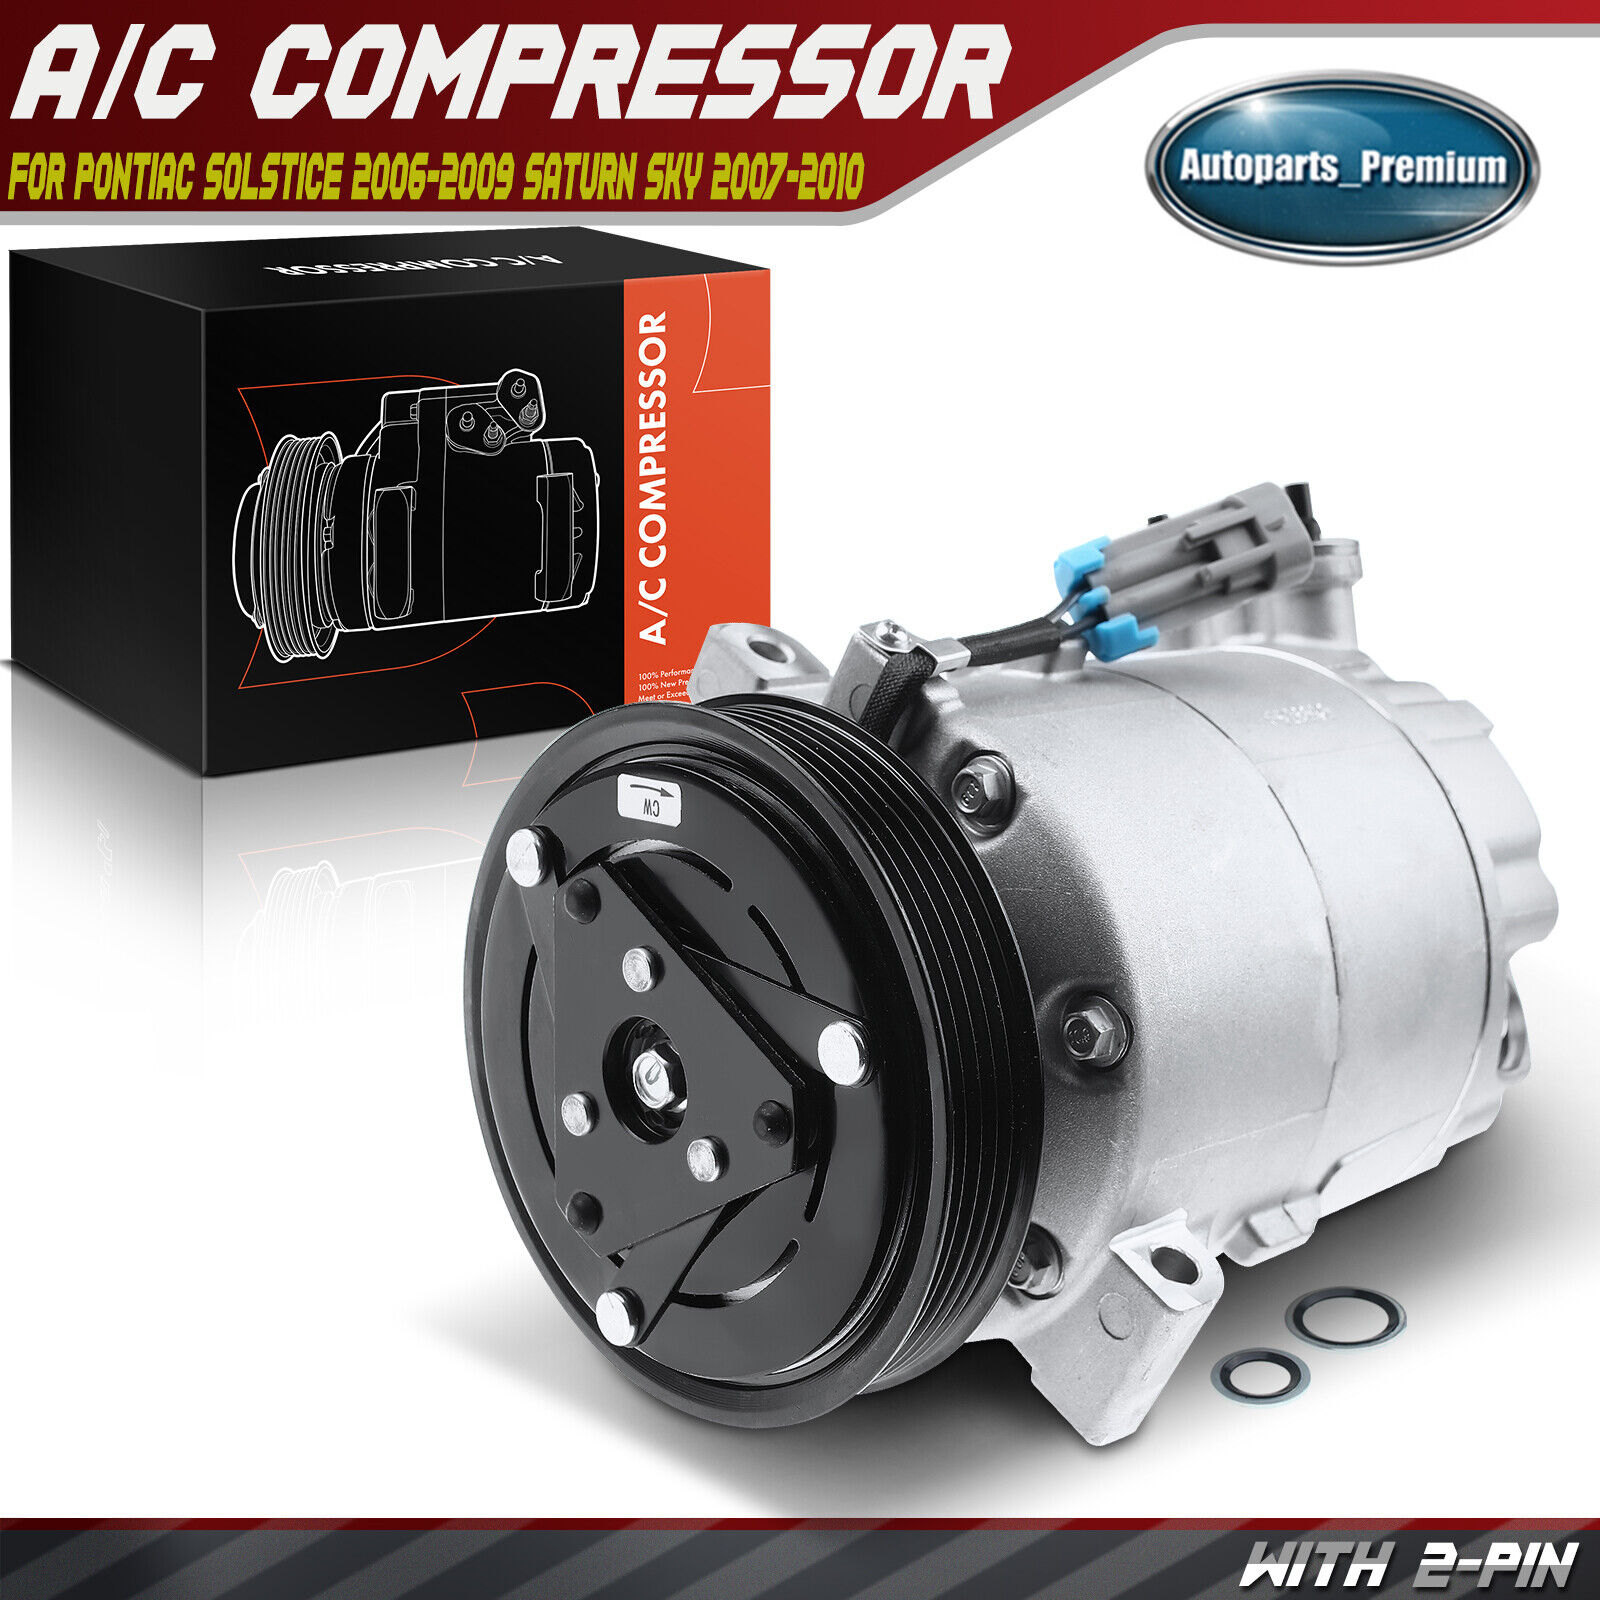 AC Compressor with Clutch for Pontiac Solstice 2006-2009 Saturn Sky 2007-2010